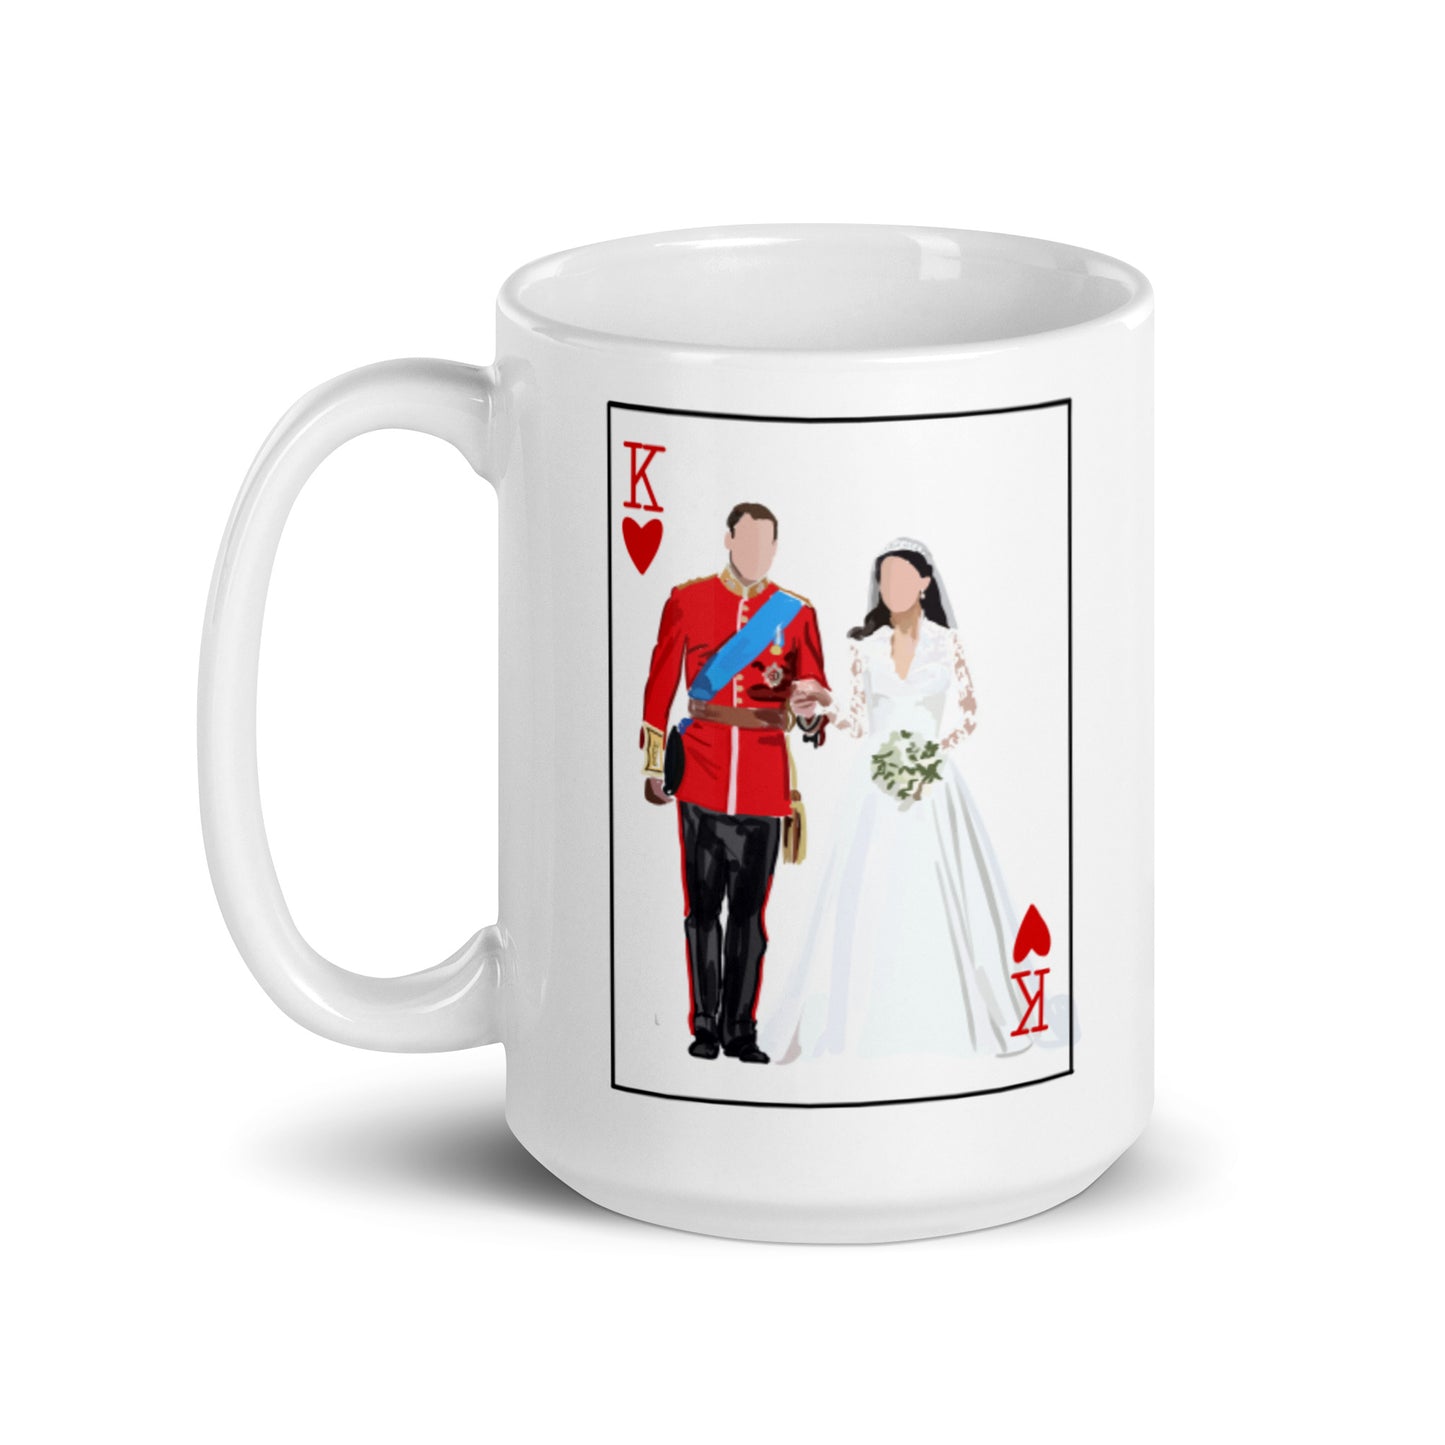 King of hearts with the princess and prince of wales White glossy mug